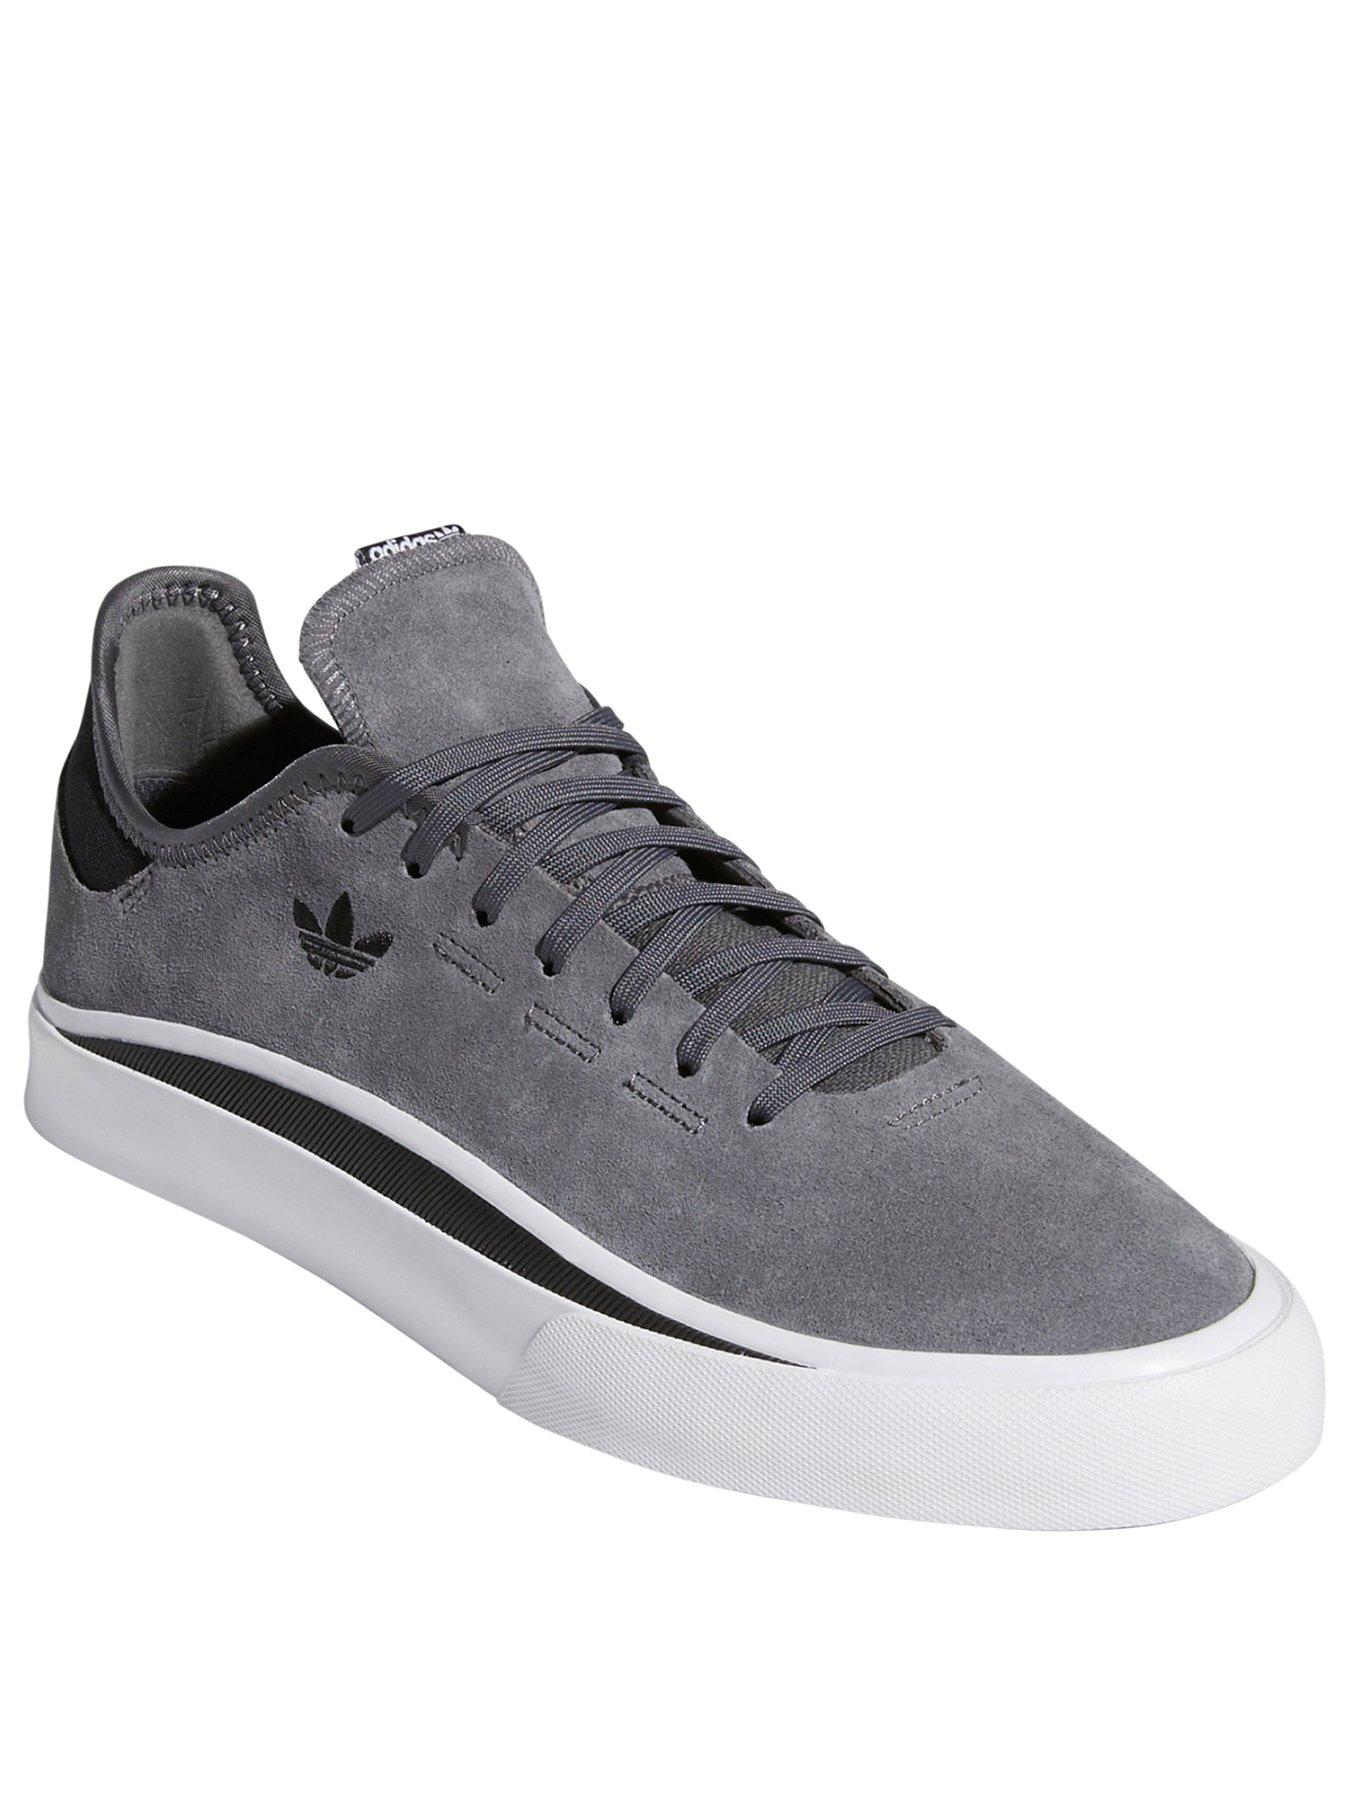 adidas skateboarding sabalo trainers in grey suede